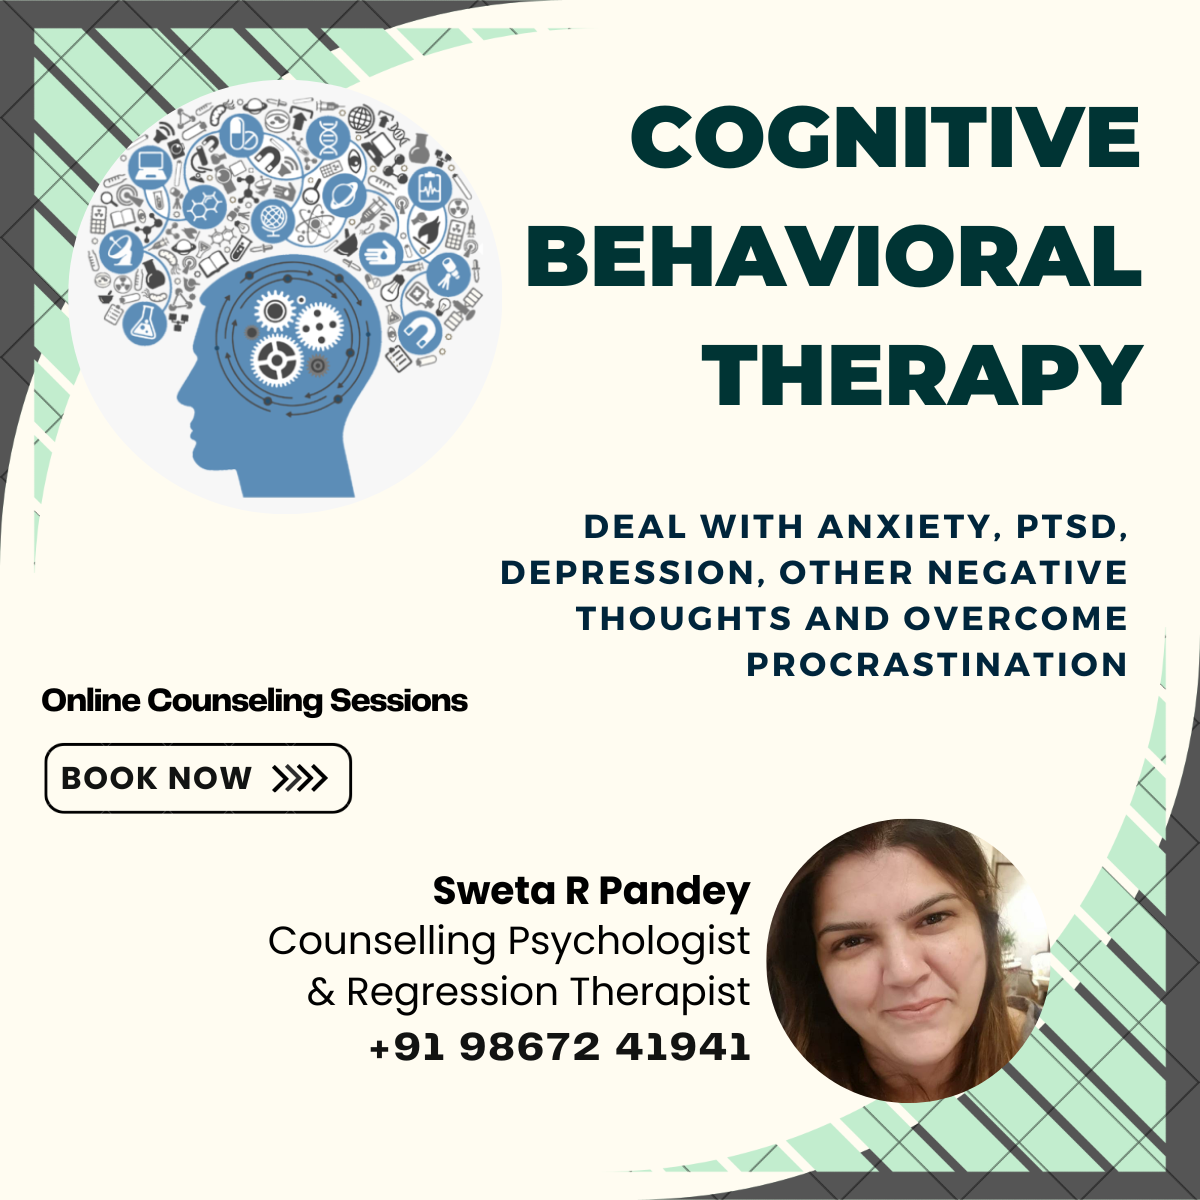 Sweta R Pandey - Cognitive Behavioral Therapy - Vadodara